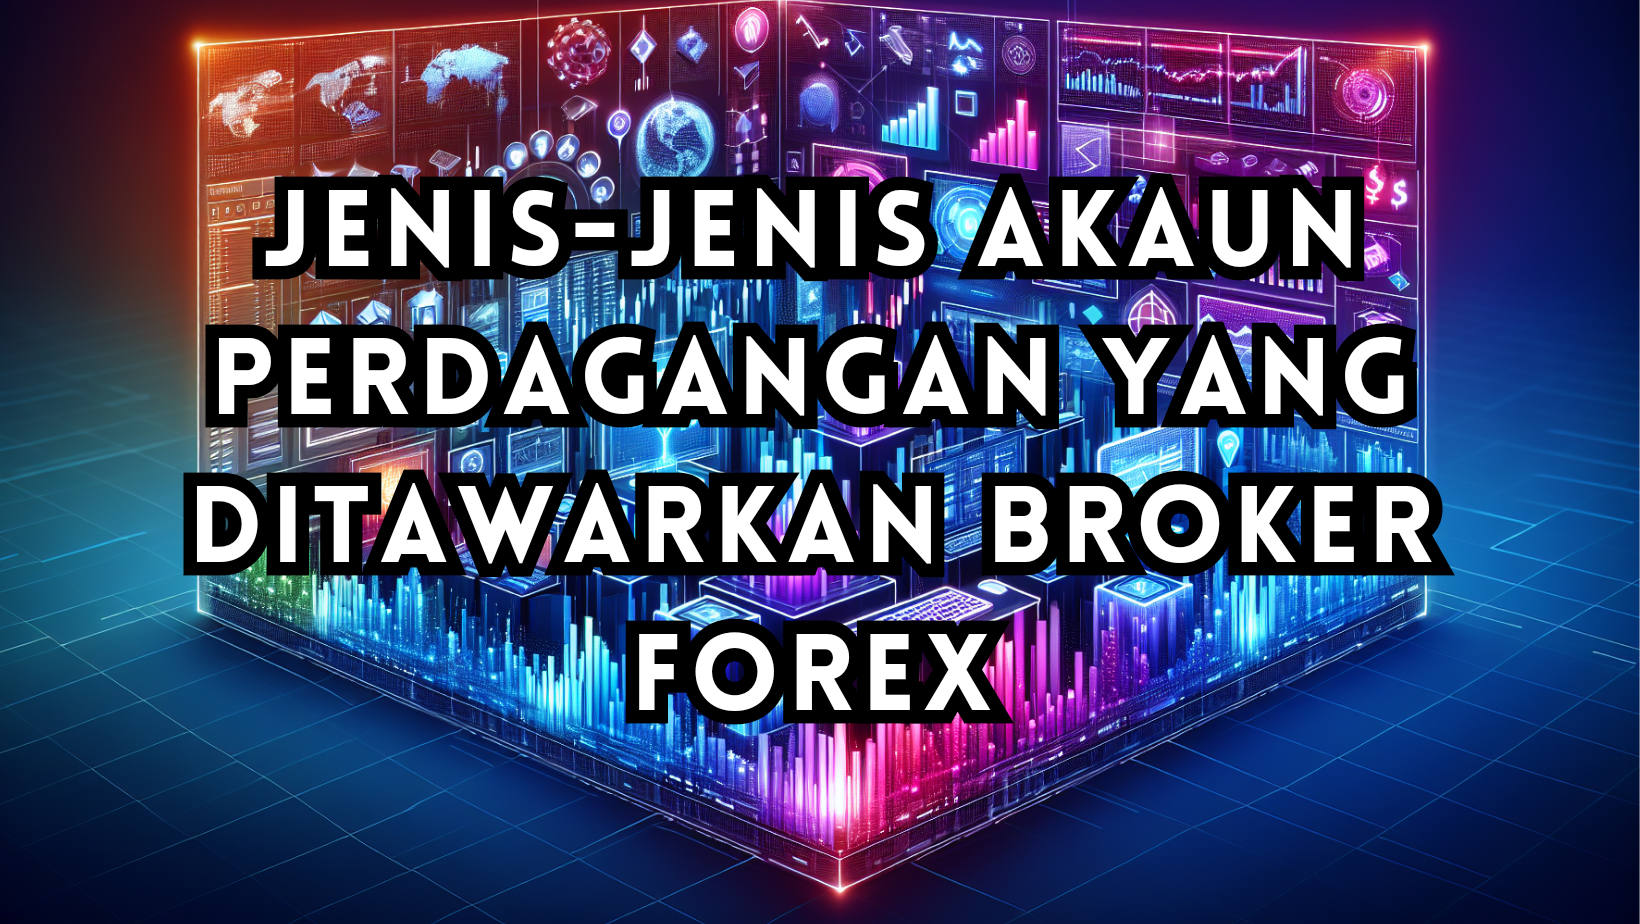 Read more about the article Jenis-Jenis Akaun Perdagangan yang Ditawarkan Broker Forex